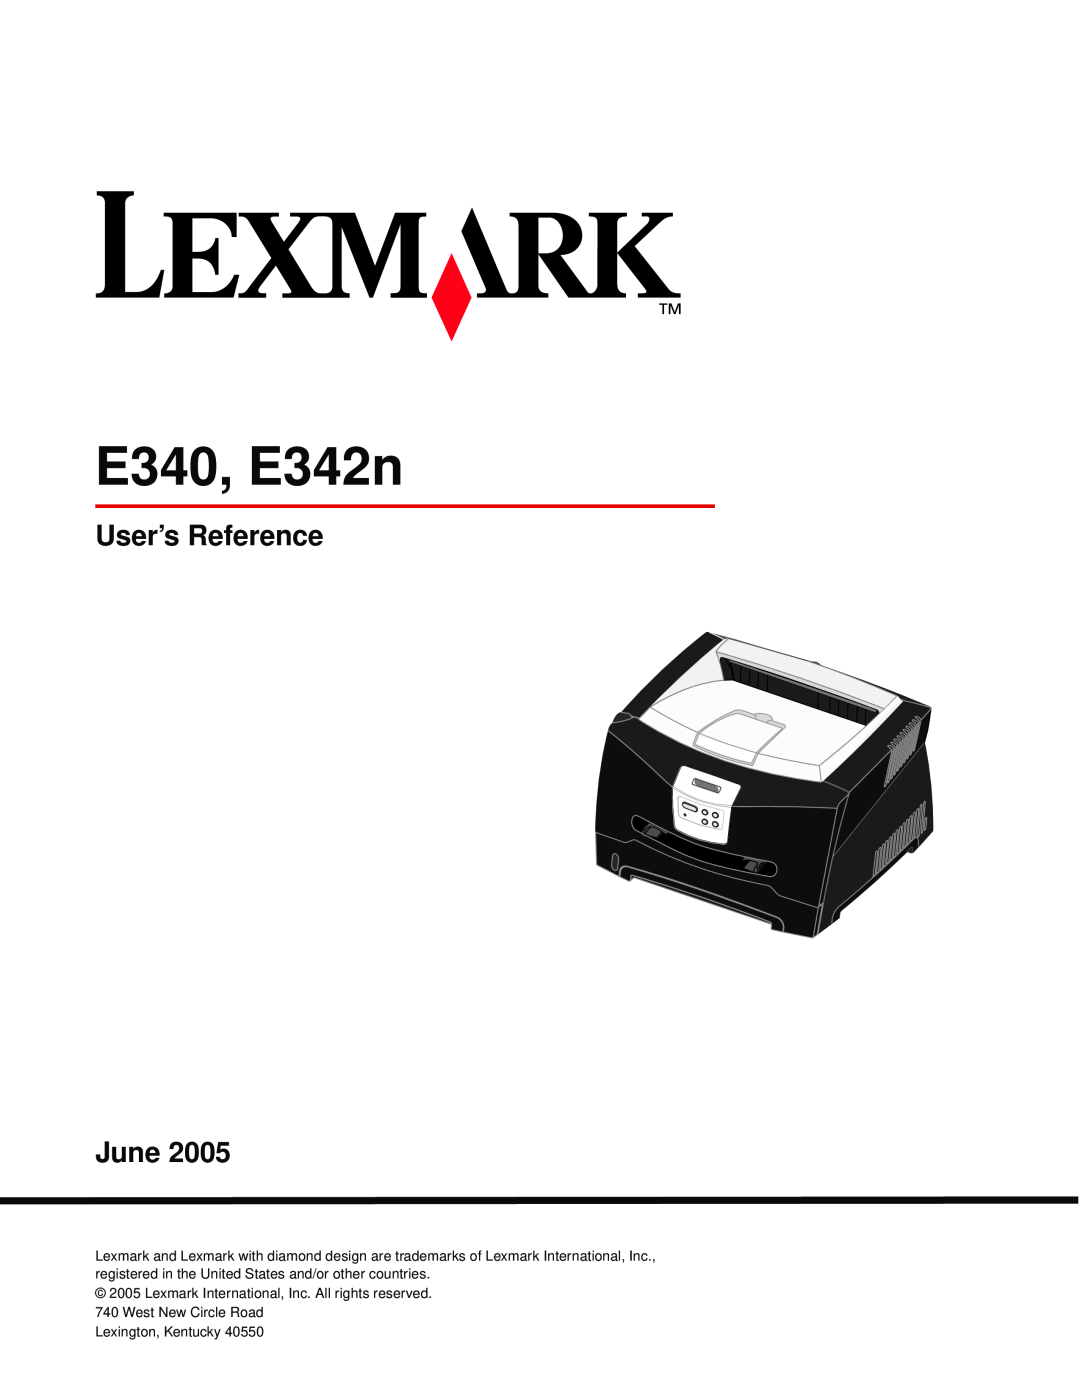 Lexmark manual E340, E342n, User’s Reference June, Lexmark International, Inc. All rights reserved 